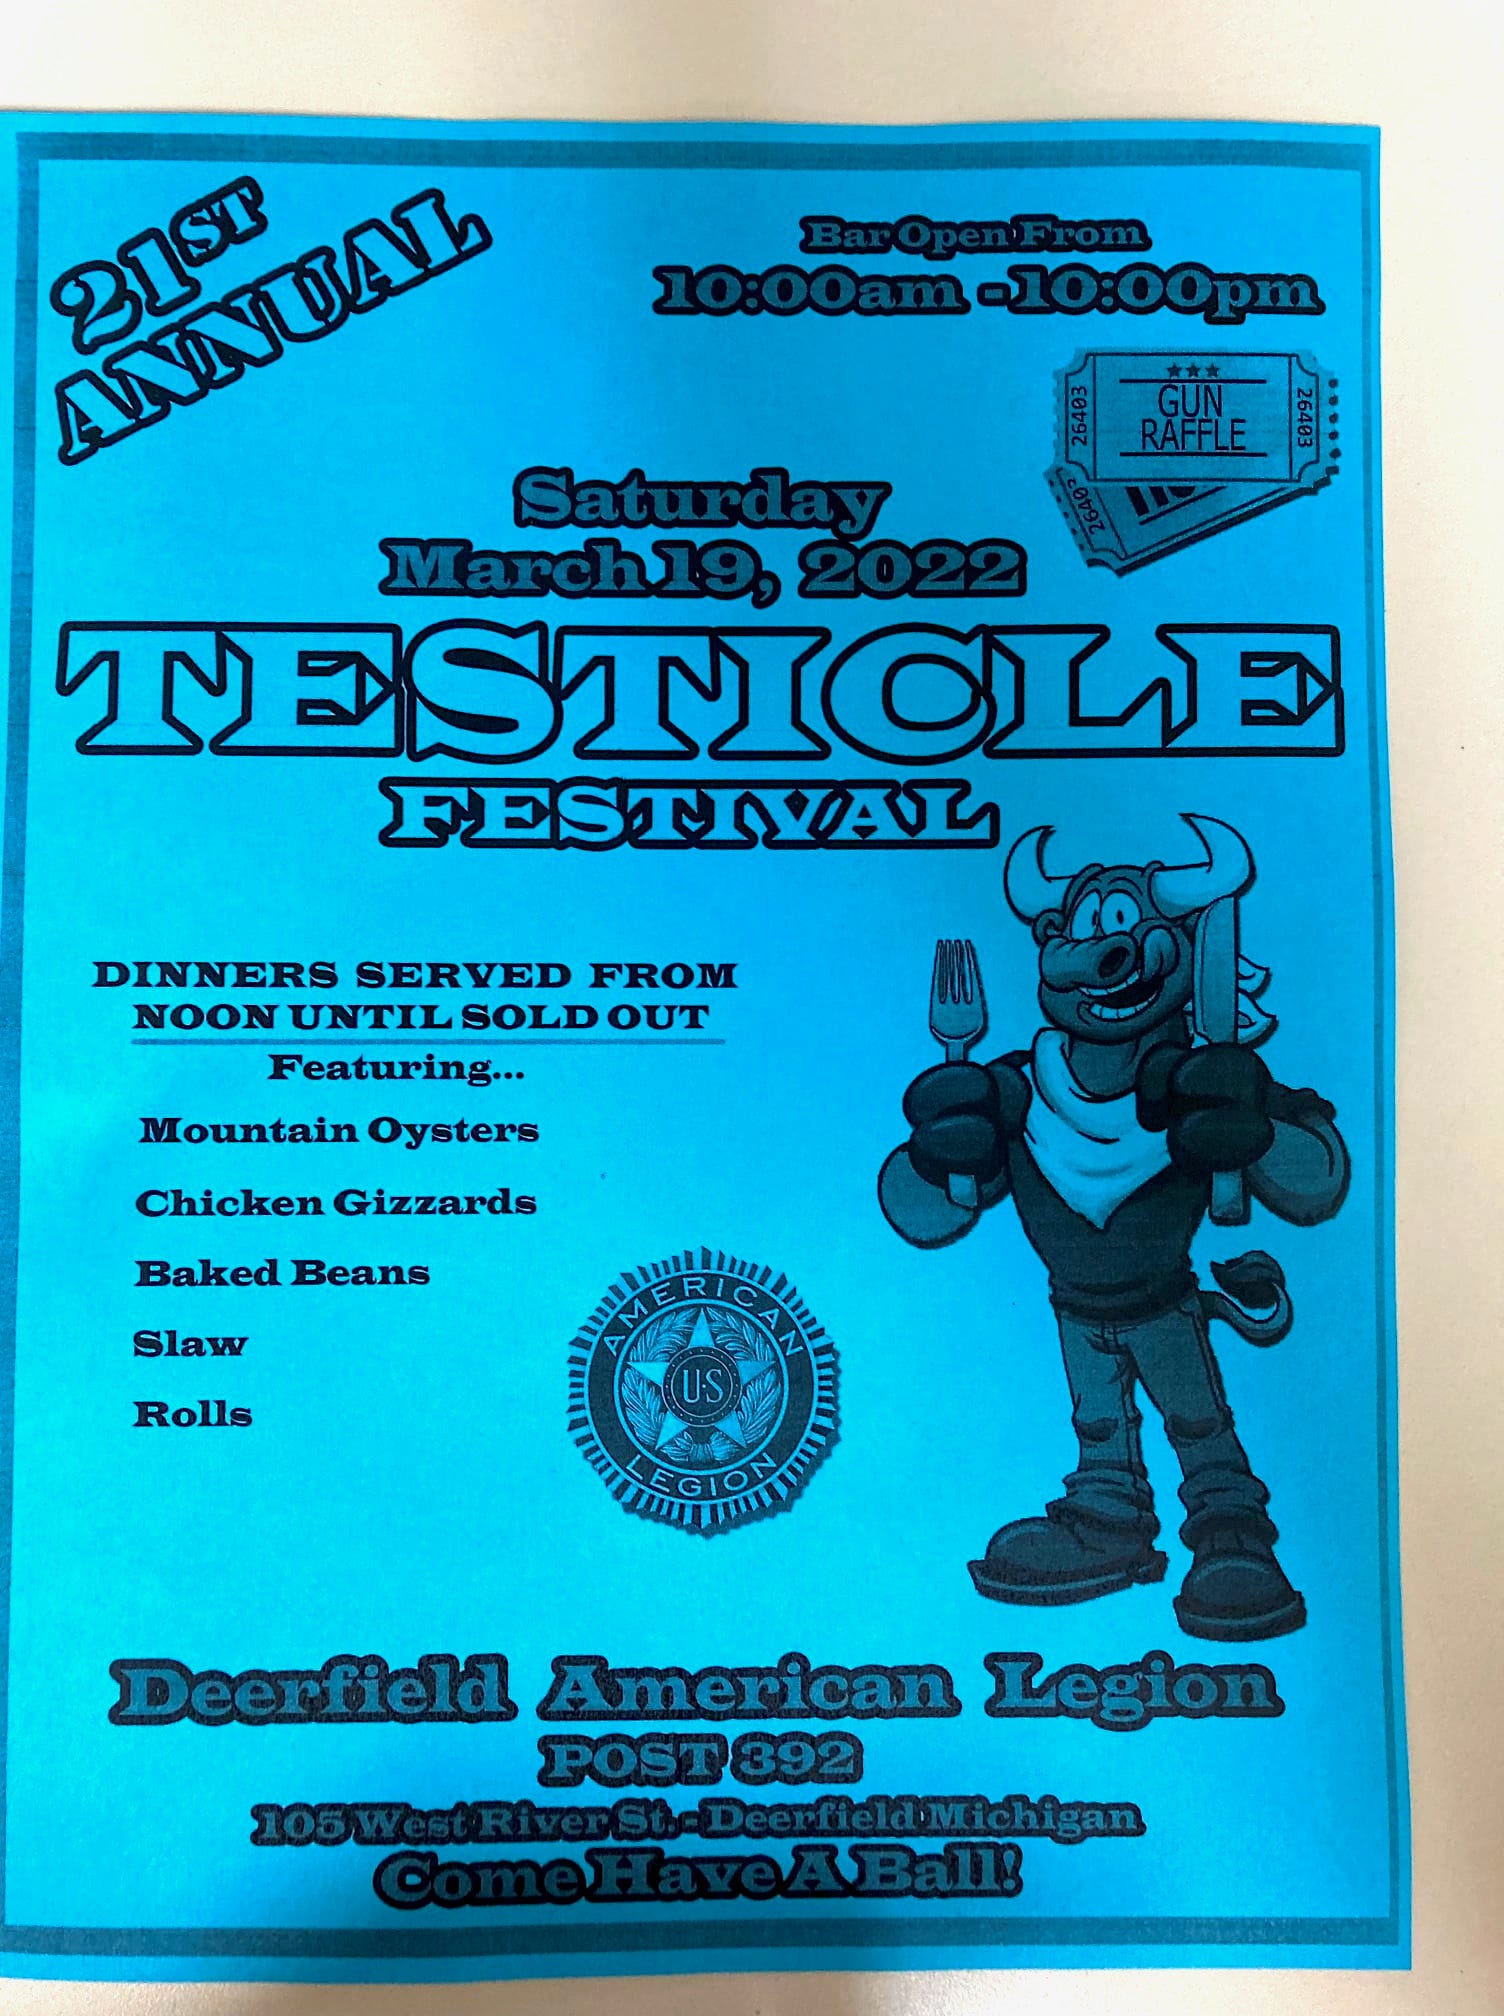 Deerfield American Legion Testicle Festival is Saturday, March 19